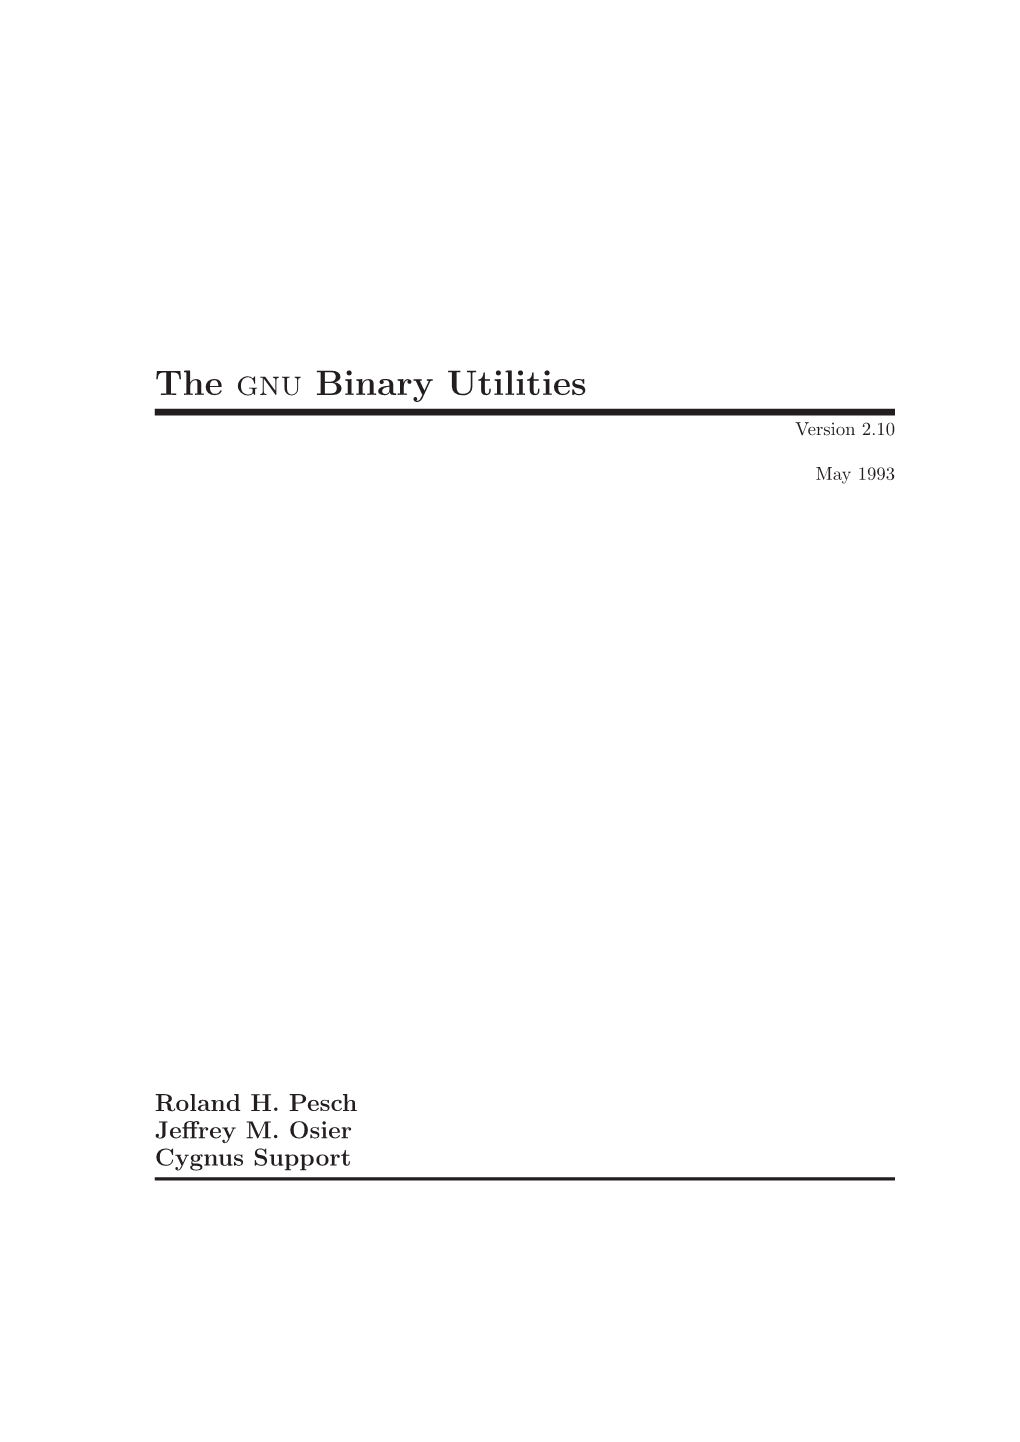 The Gnu Binary Utilities Version 2.10